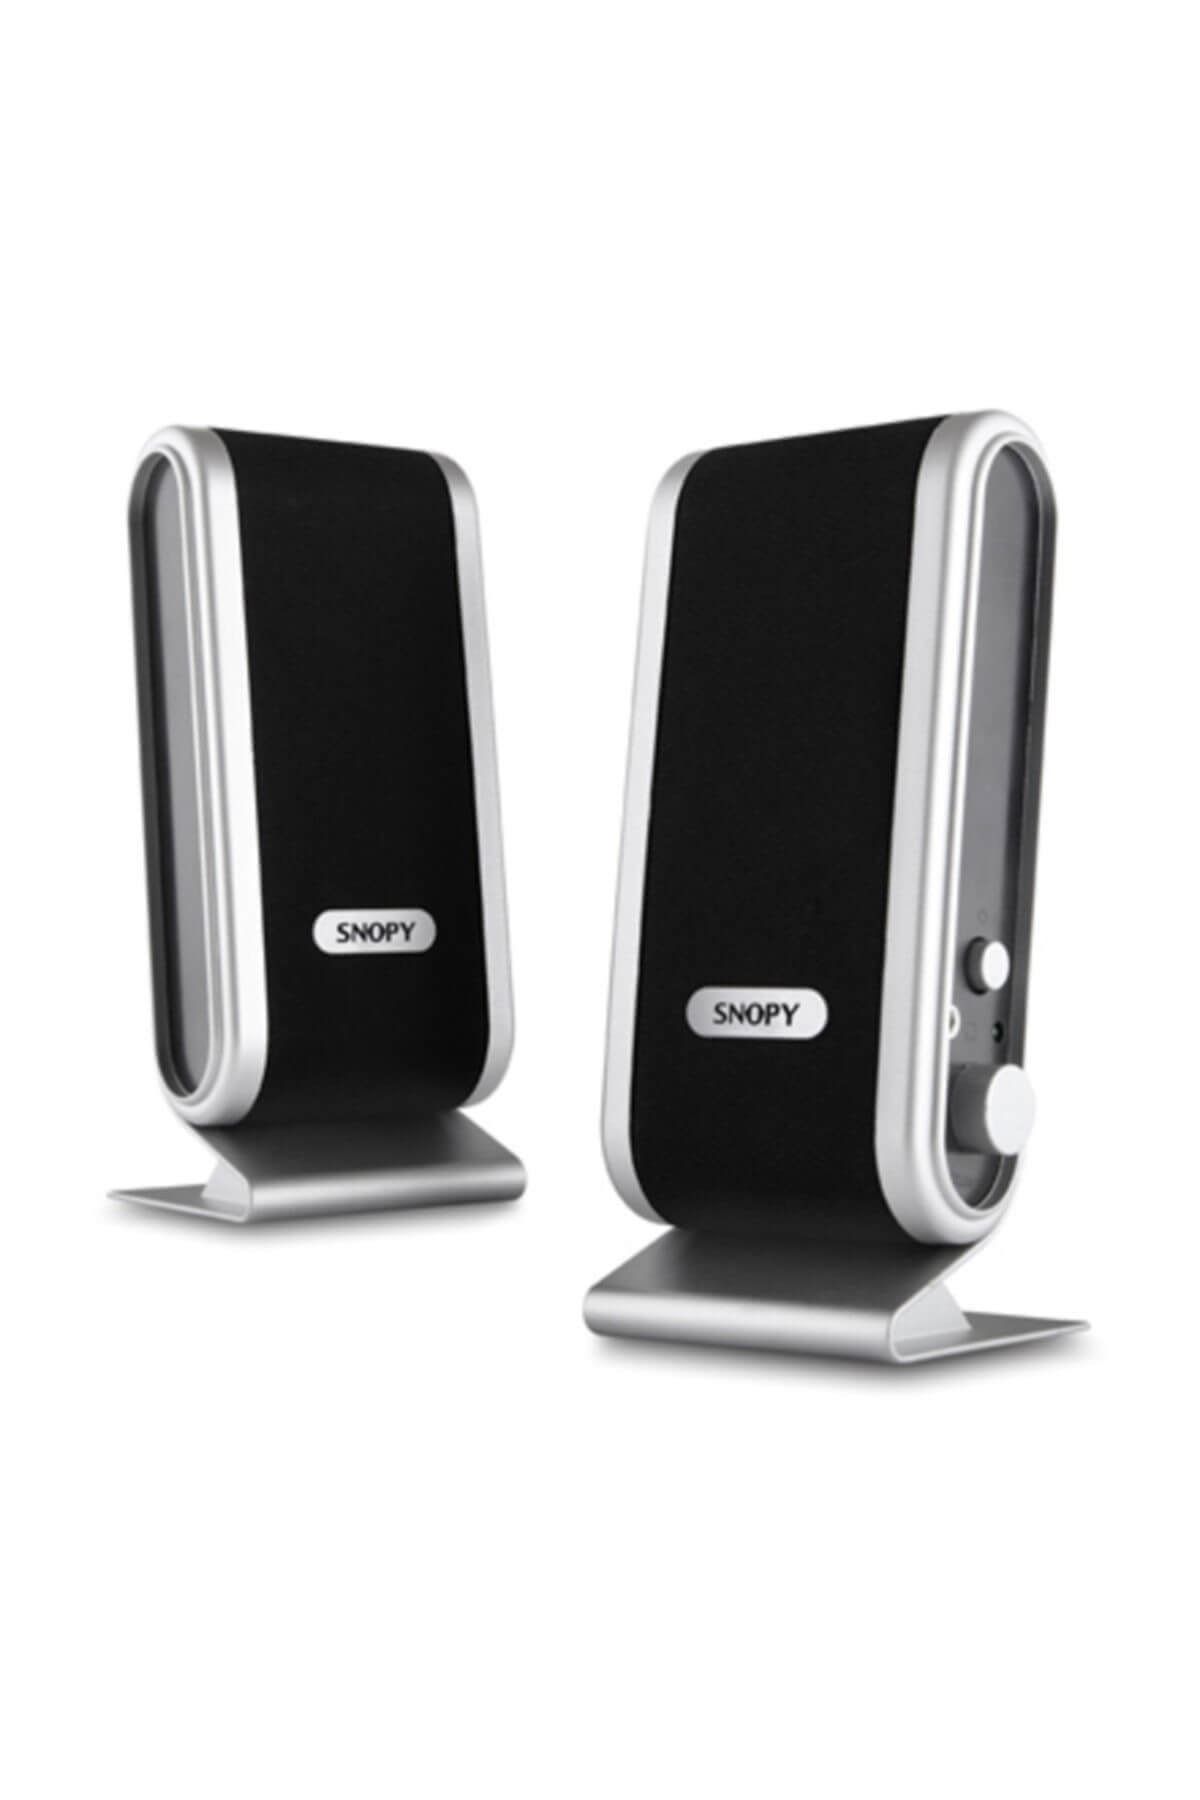 Snopy 2.0 Siyah/Gümüş Lcd İnce Tasarım USB Speaker